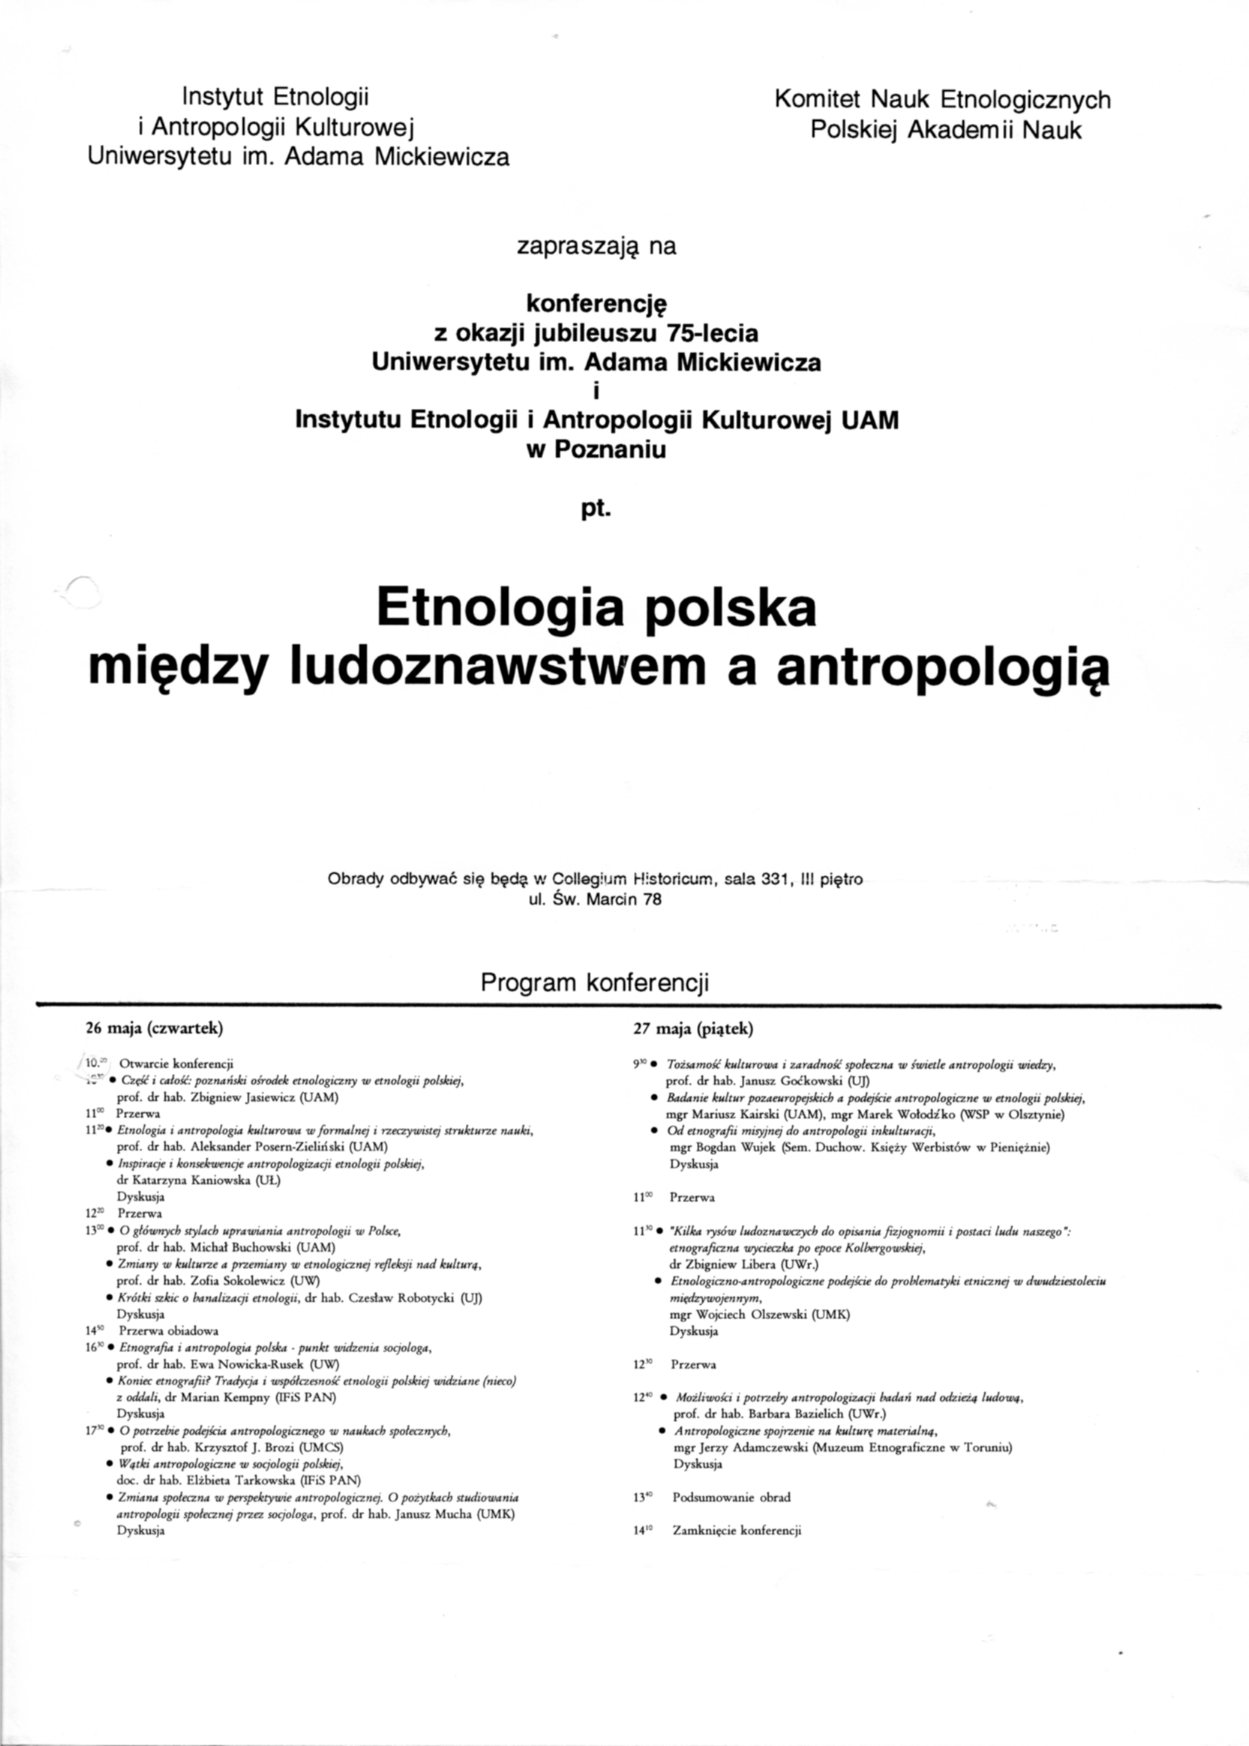 konferencja-1994-Poznan-plakat